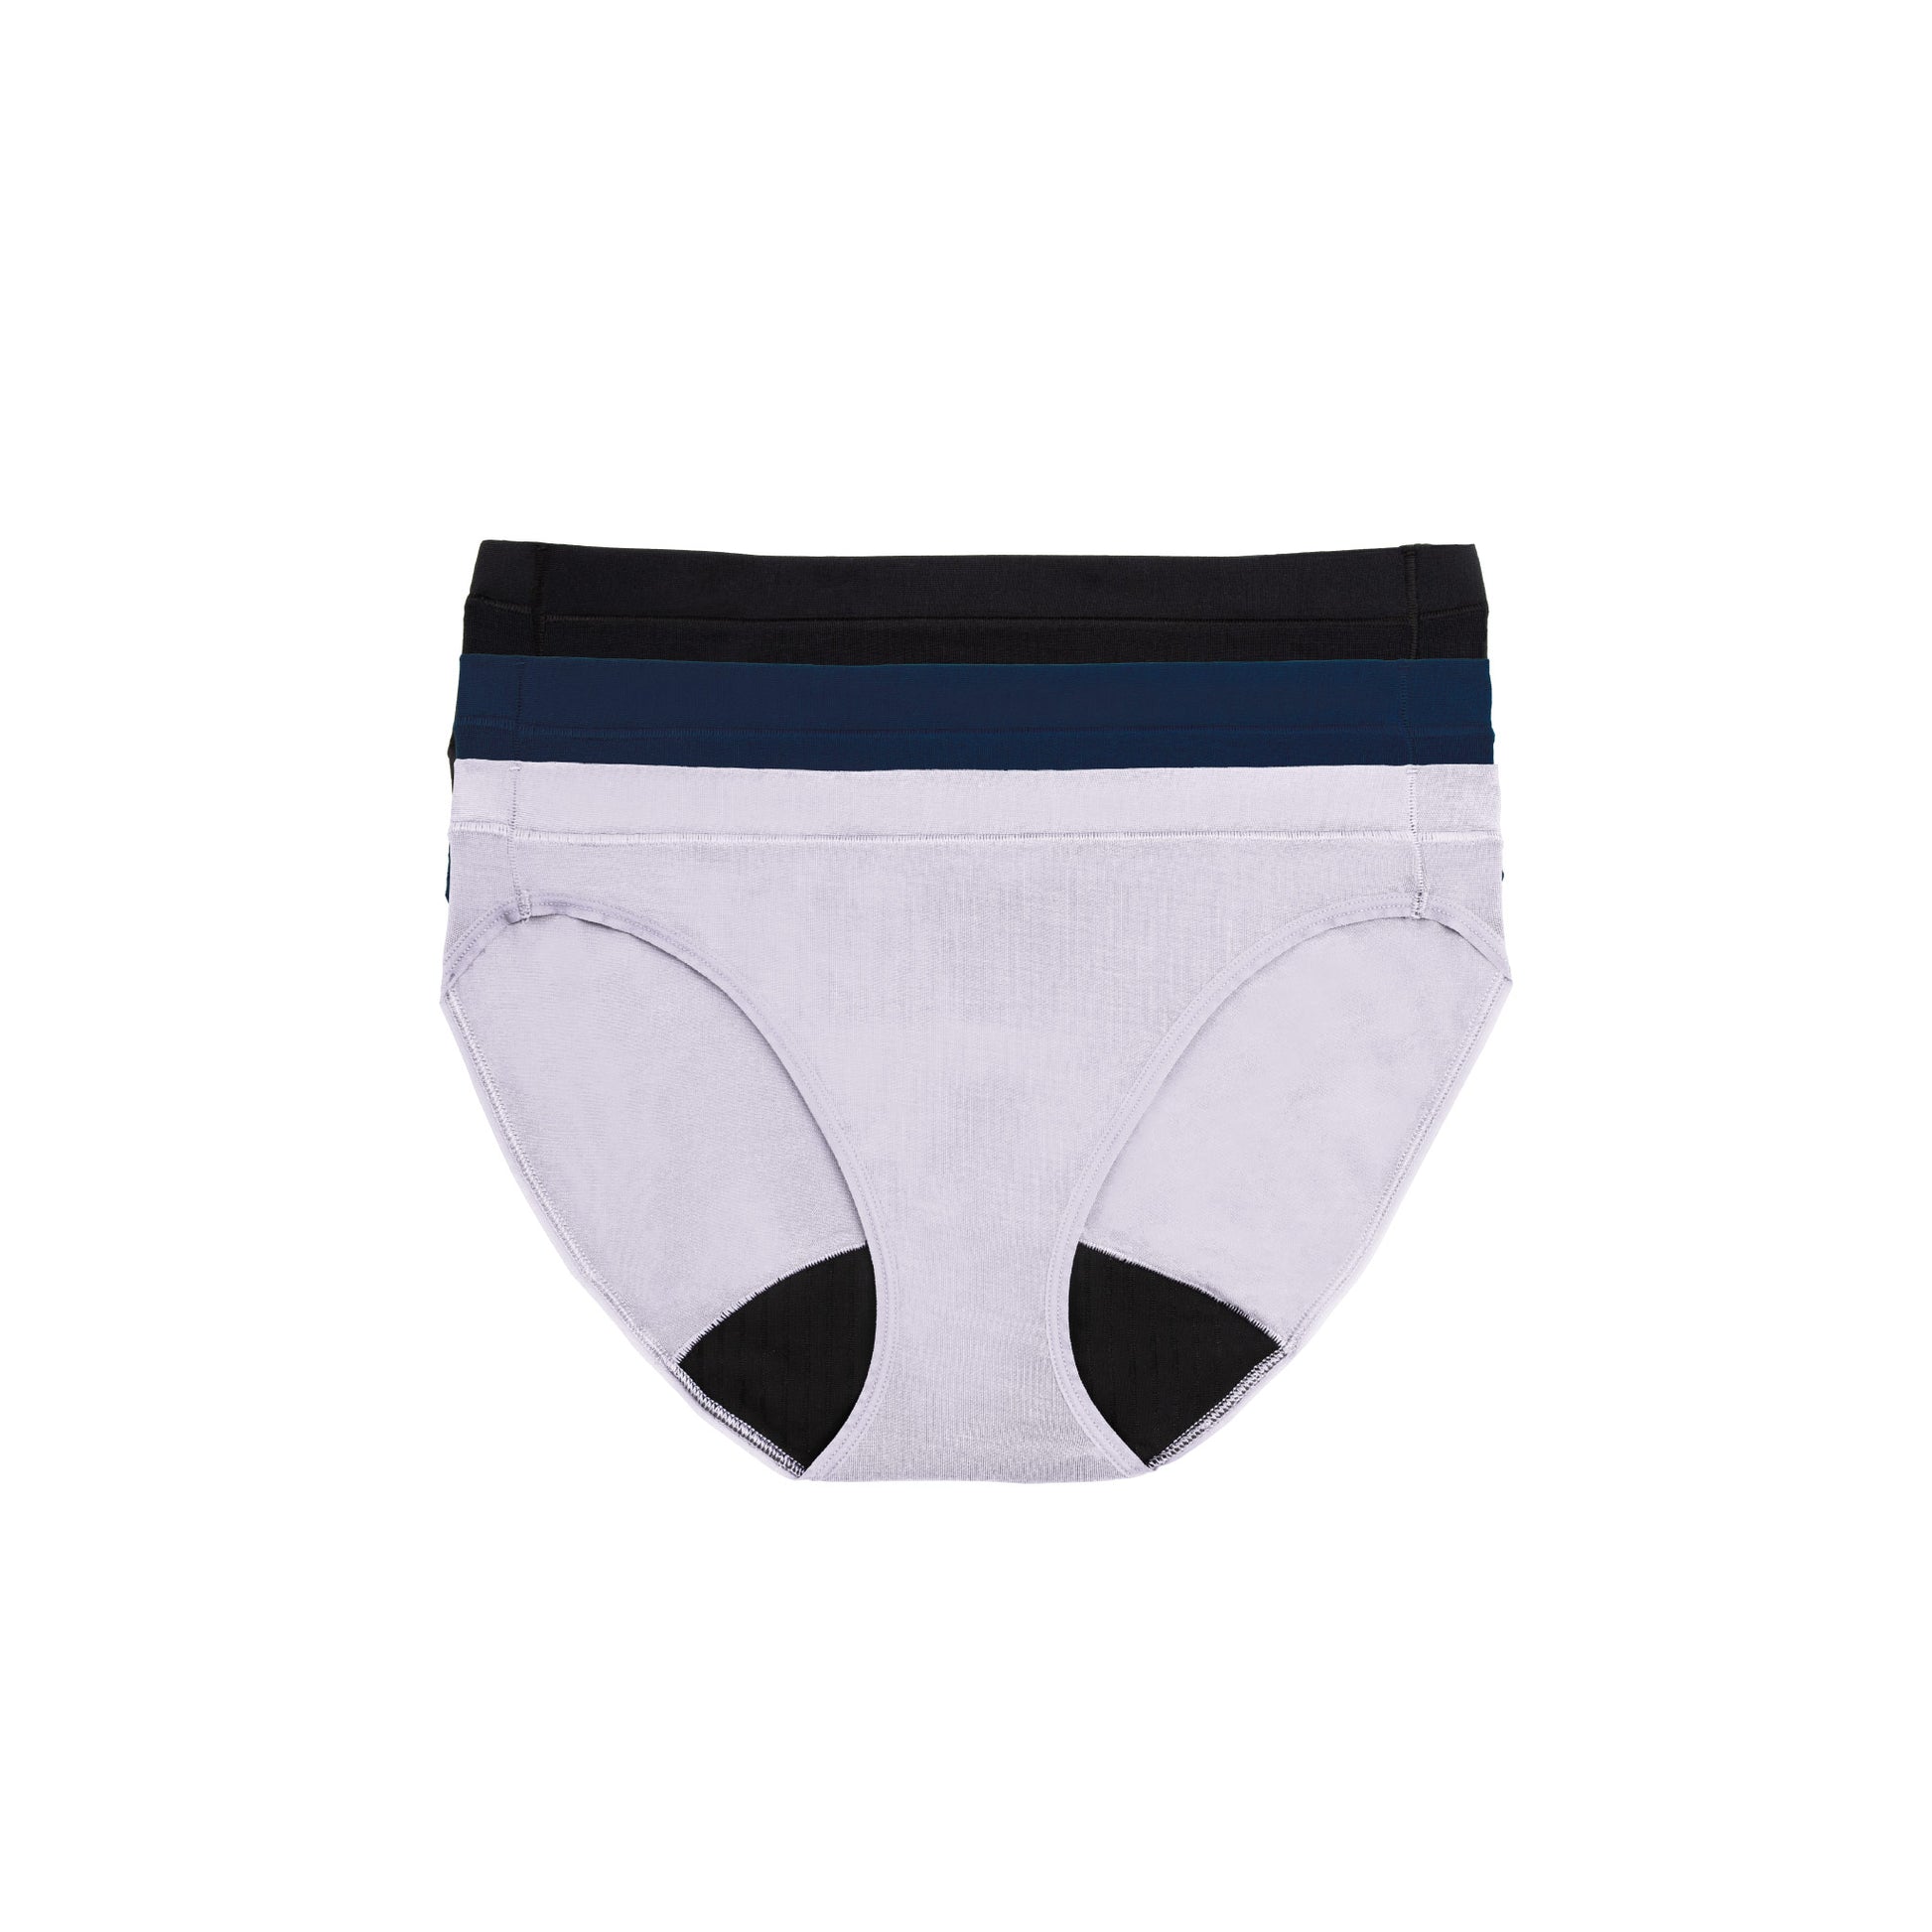 Saalt Reusable Period Underwear - Comfortable, Thin, and Keeps You Dry from  All Leaks (Cotton, Bikini) (Volcanic Black, Medium)